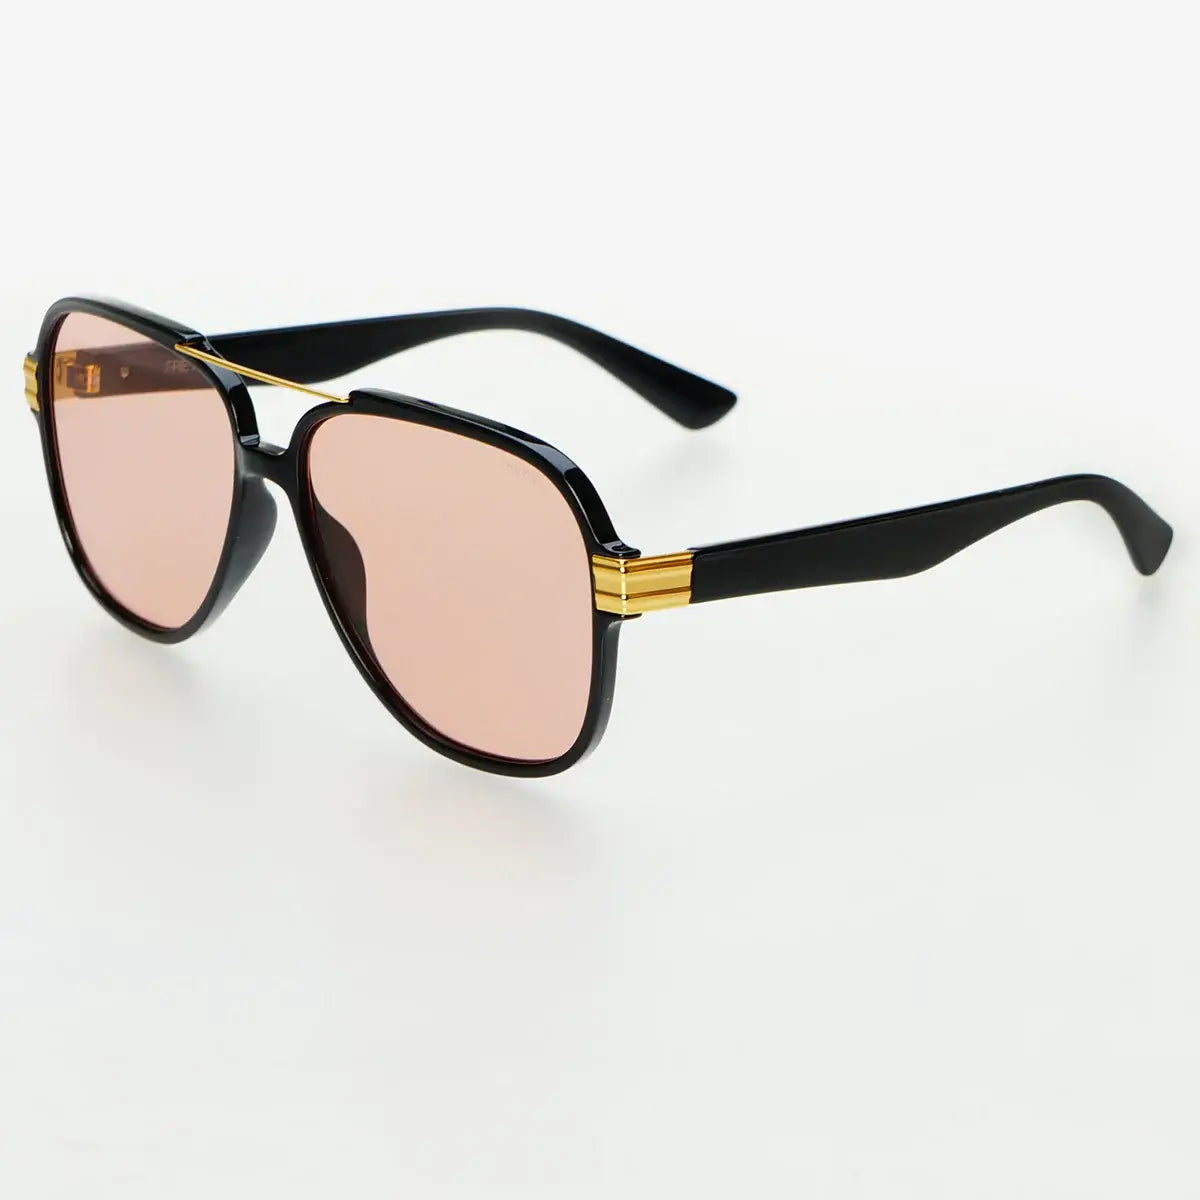 Spencer Black Pink Sunglasses